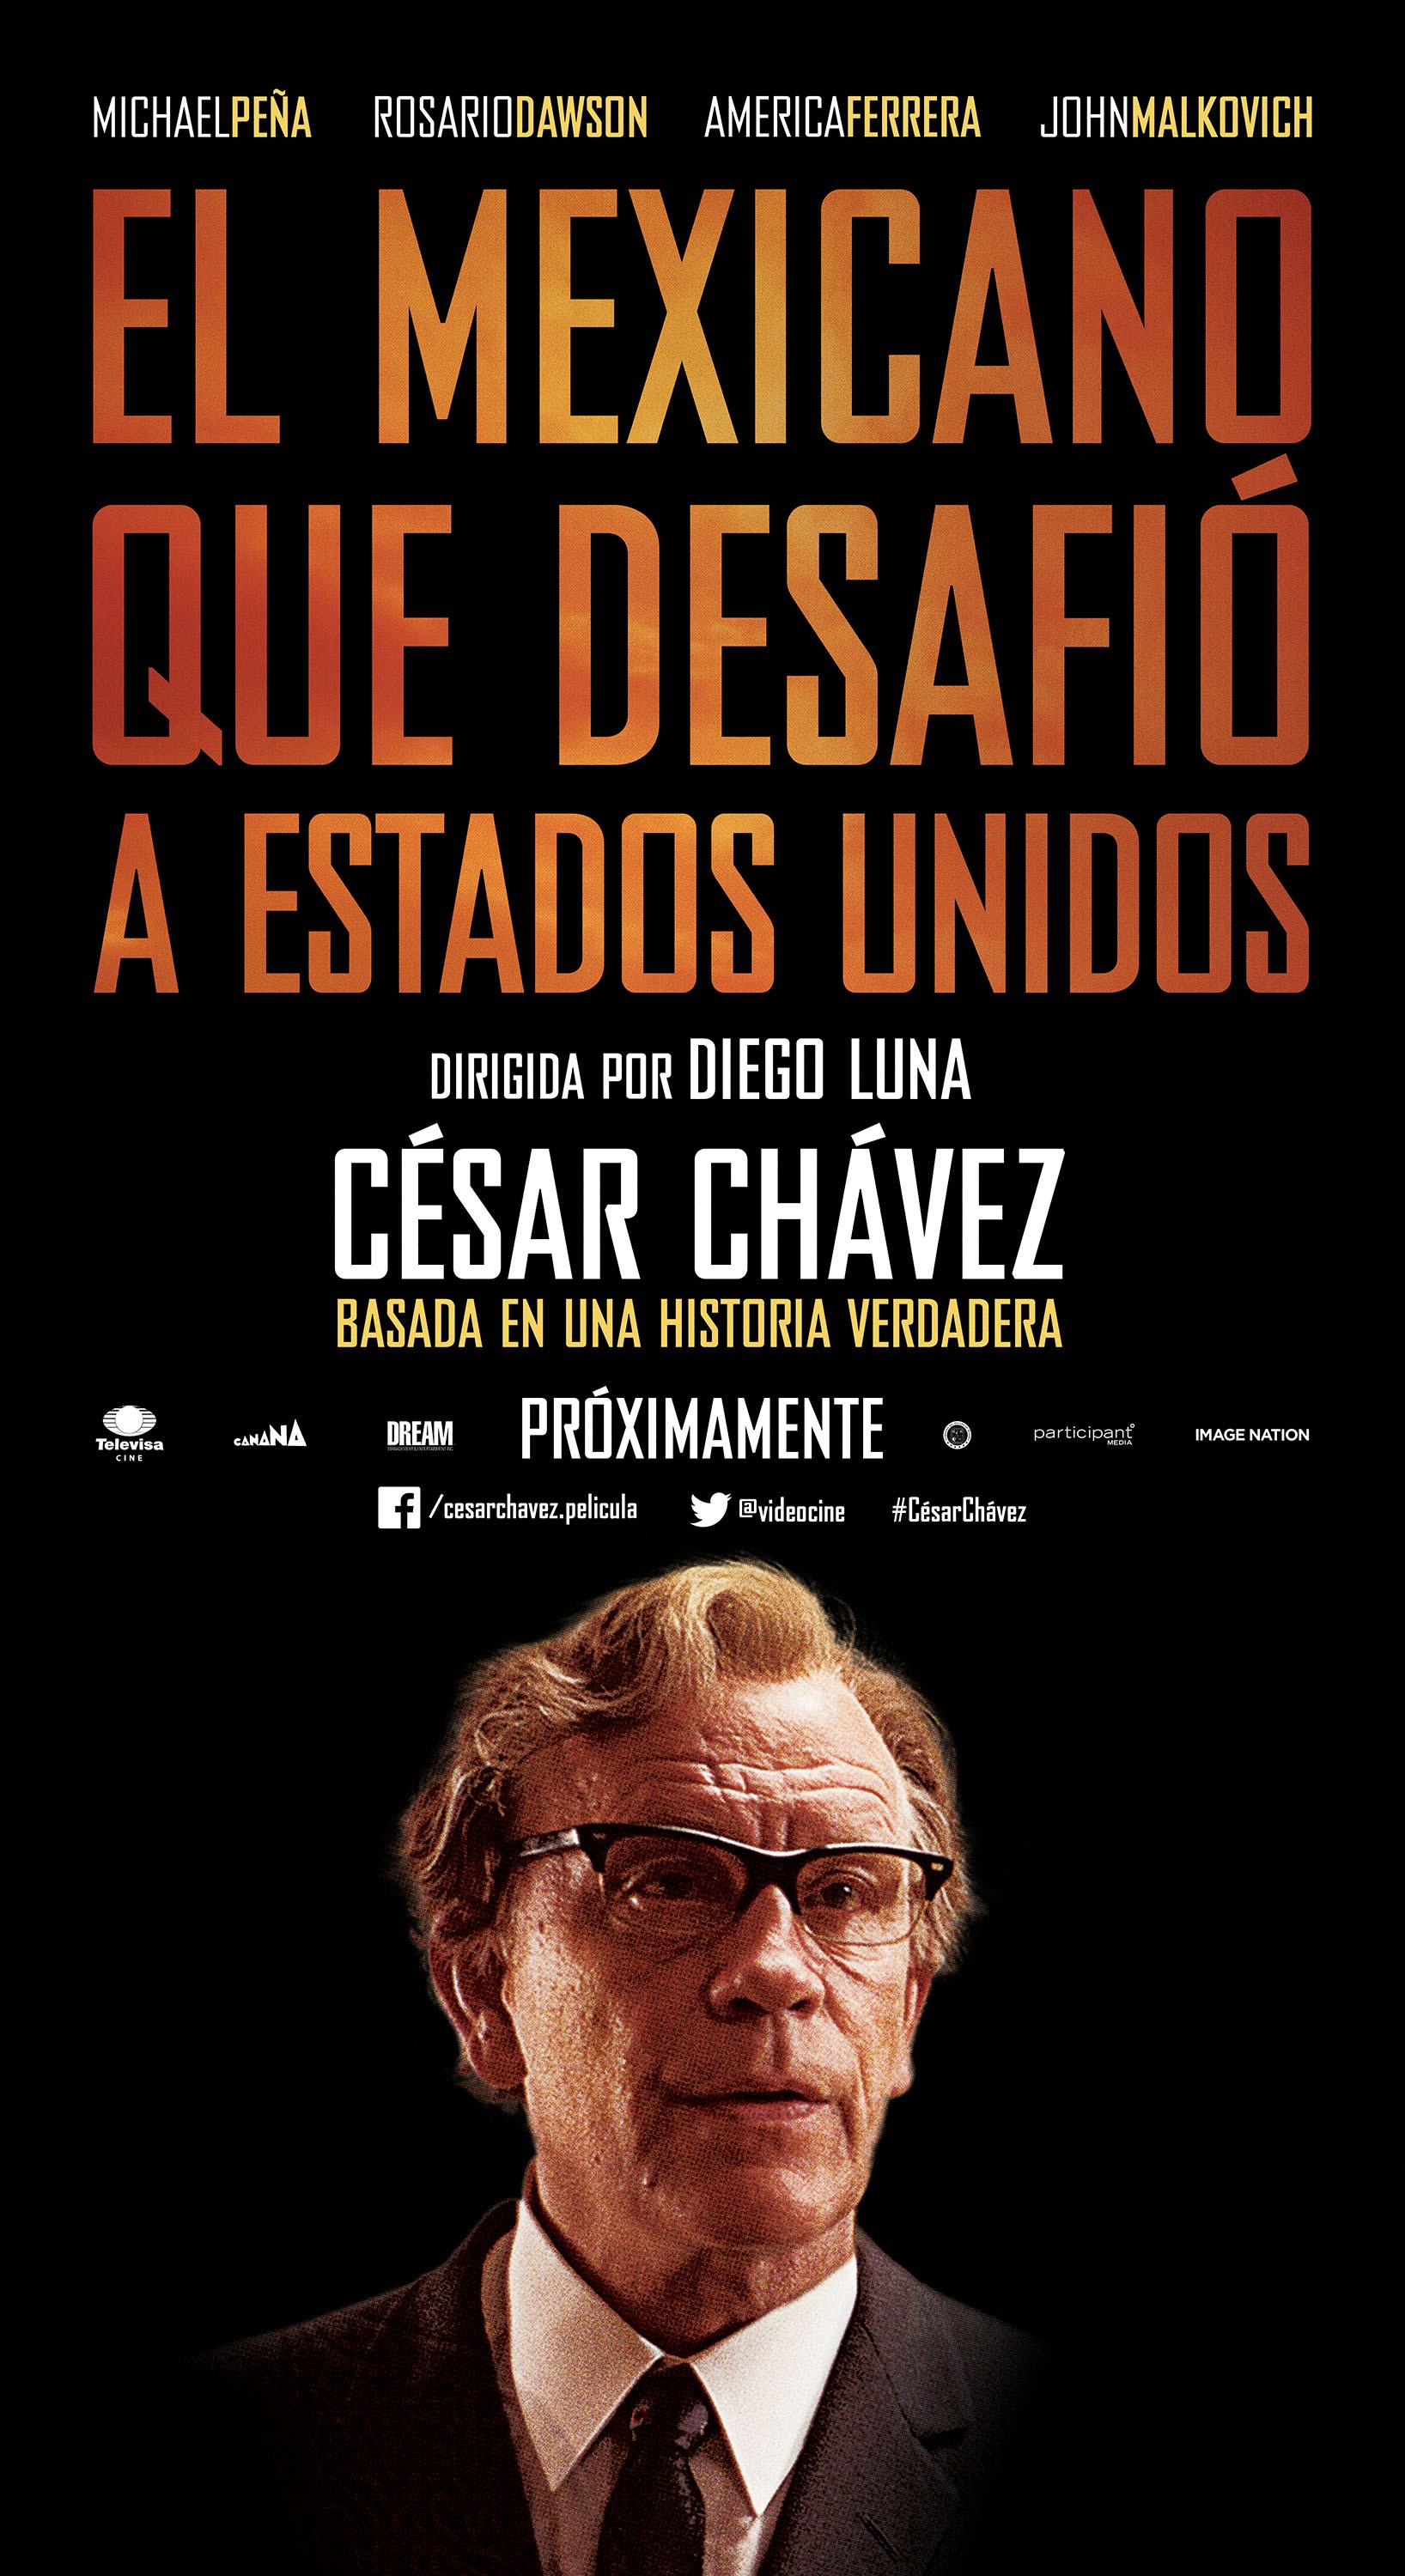 César Chávez Biografía